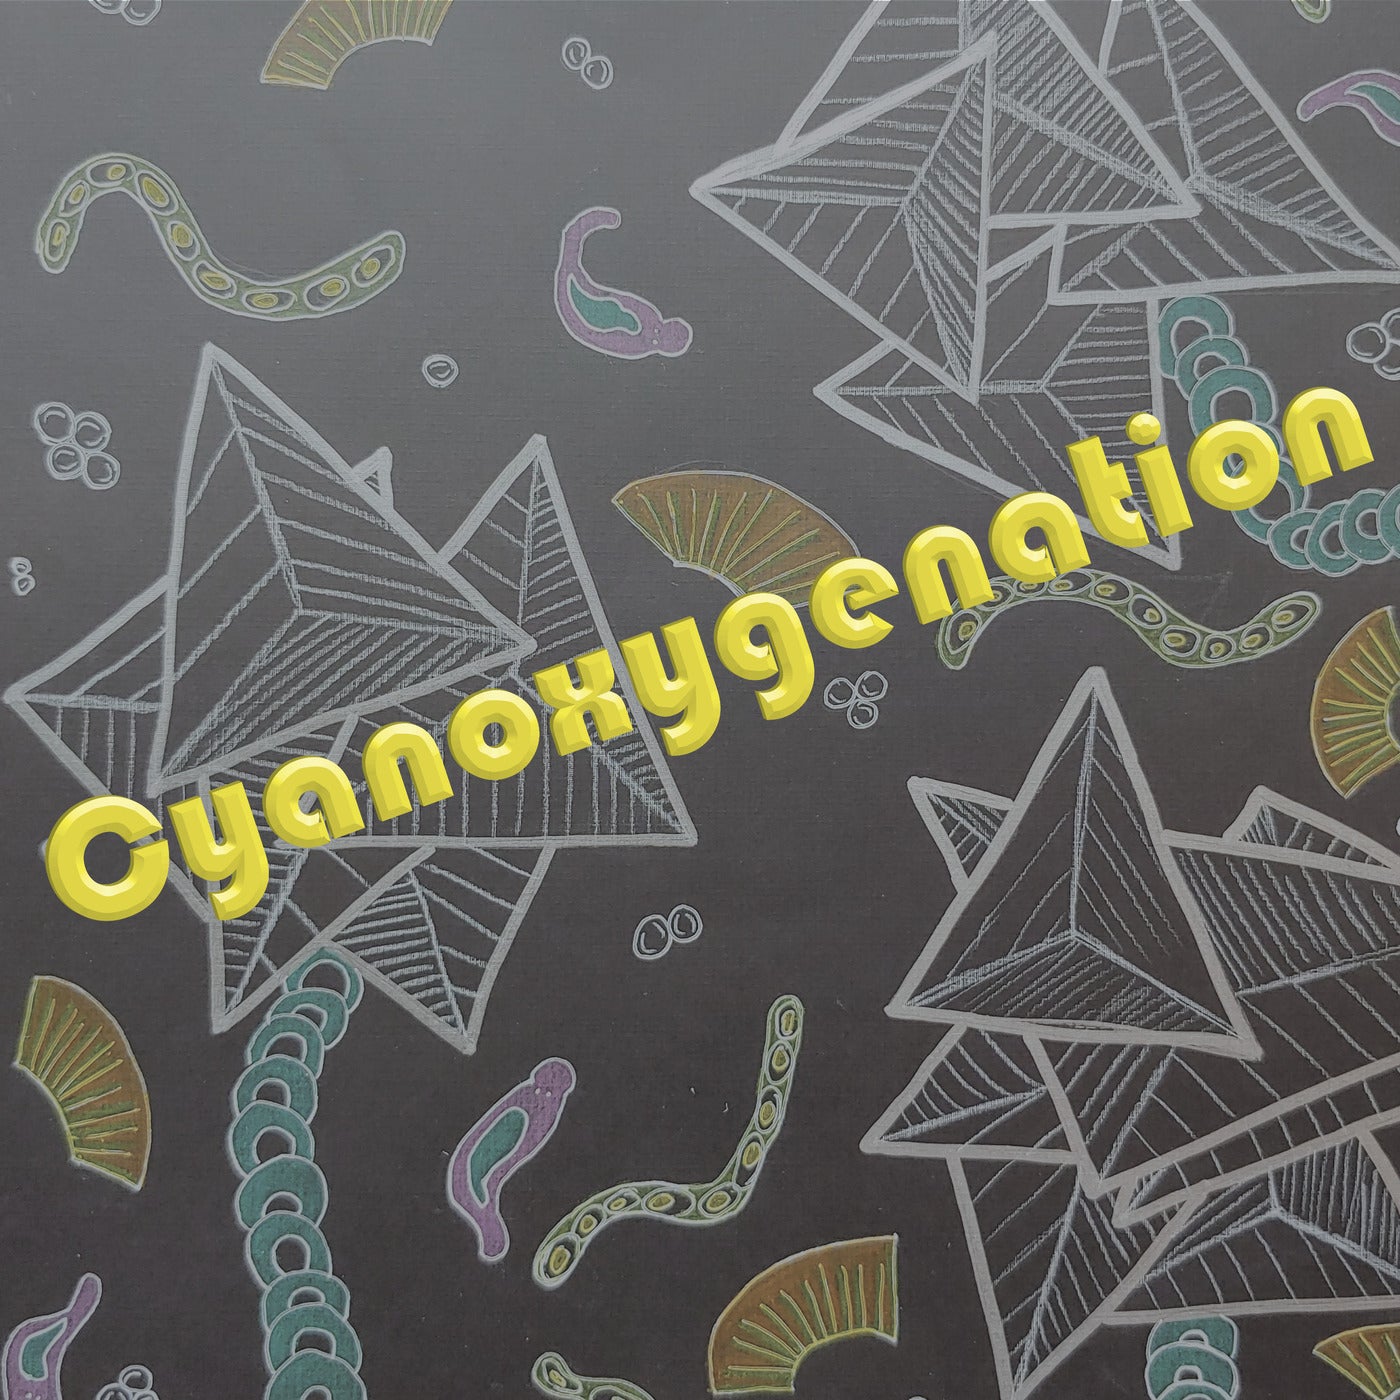 Cyanoxygenation